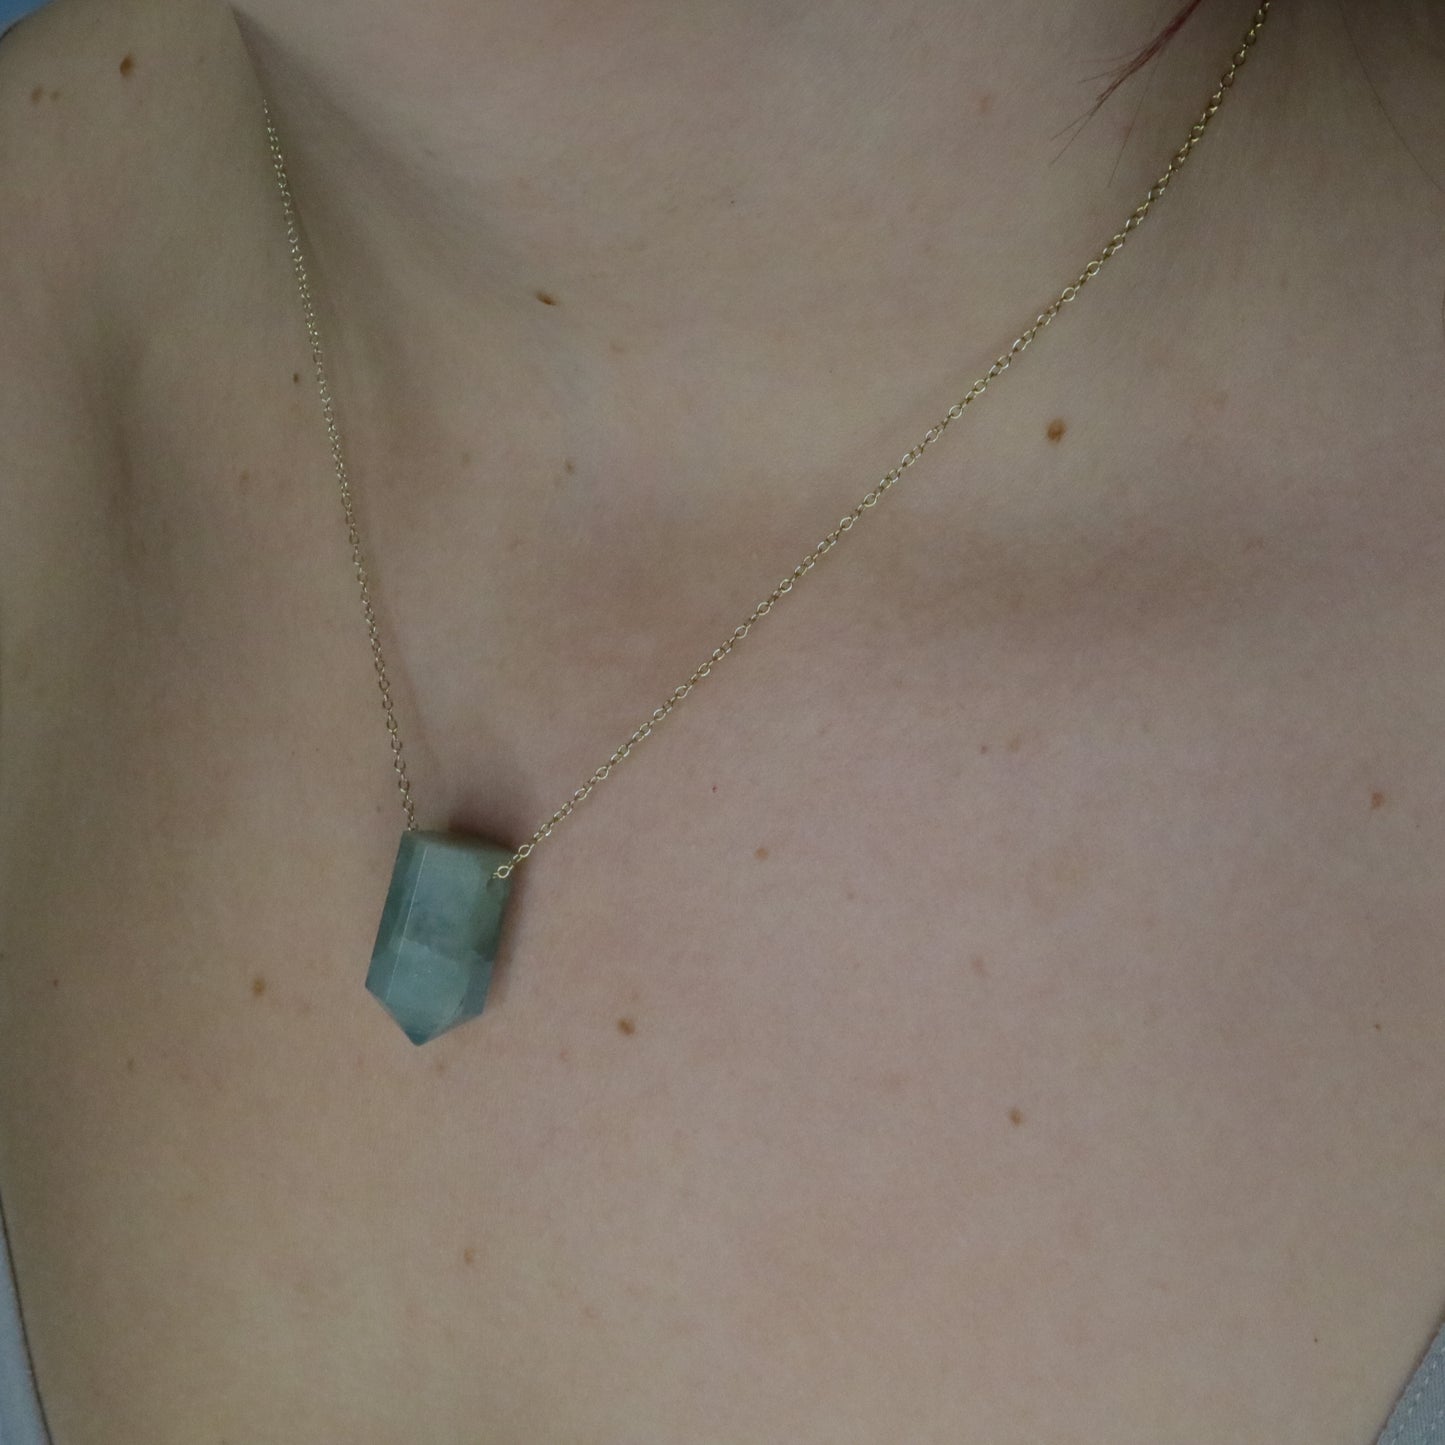 Girl wearing Aquamarine crystal necklace